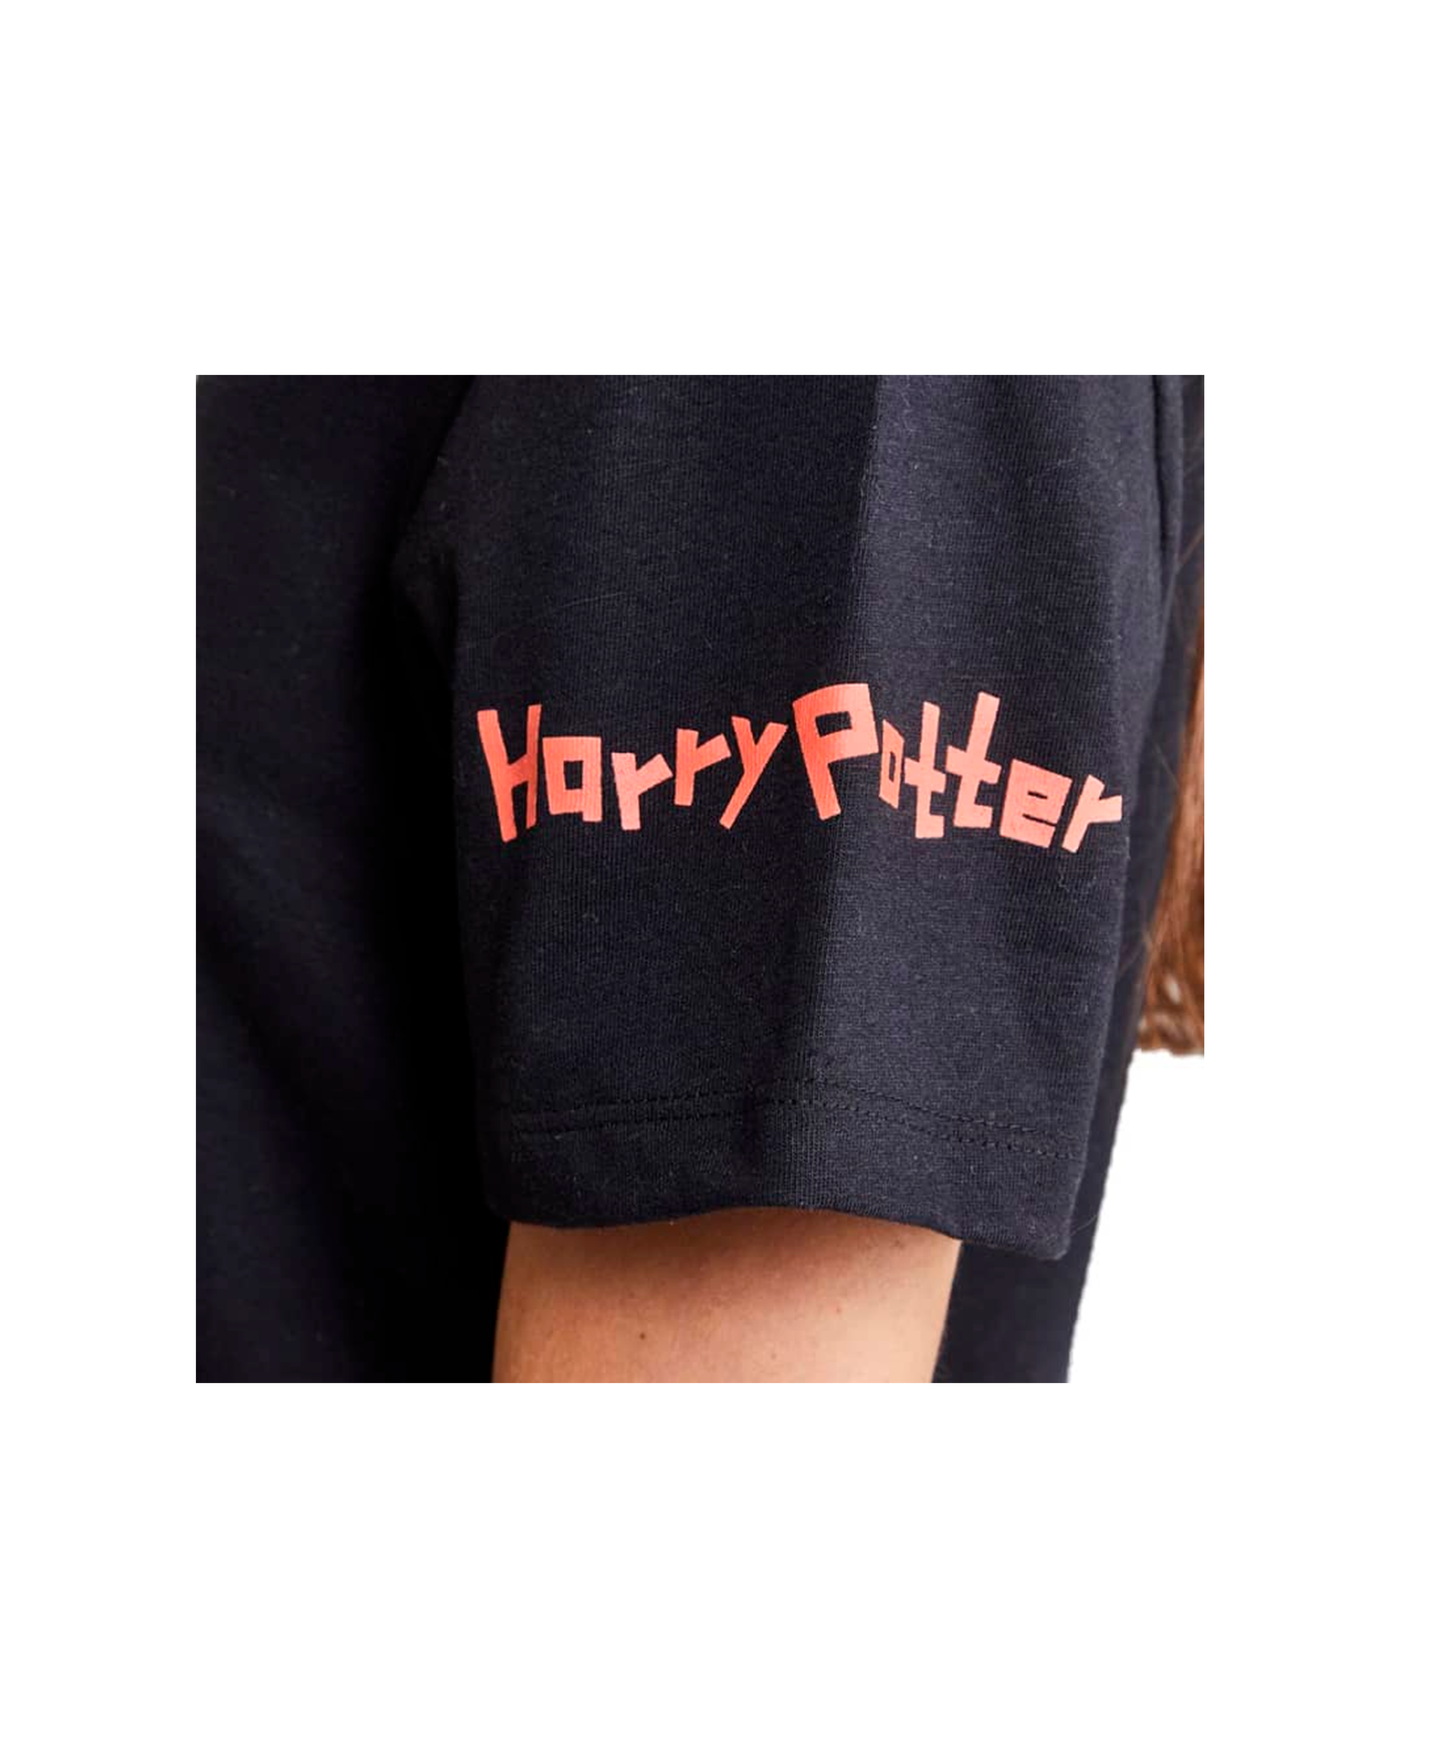 Playera Harry Potter